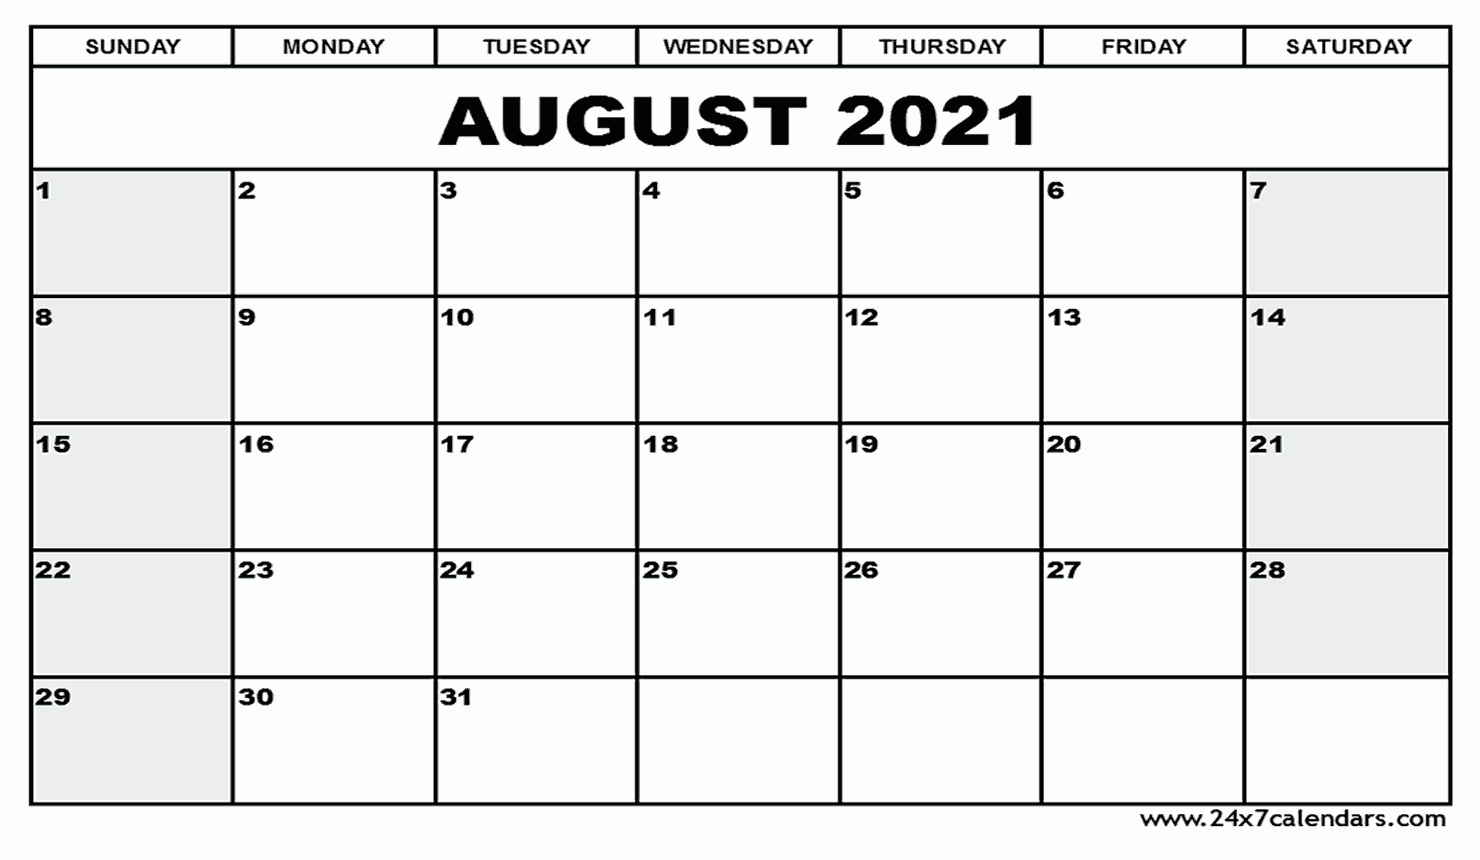 Free Printable August 2021 Calendar : 24X7Calendars Free Printable August 2021 Calendar With Holidays